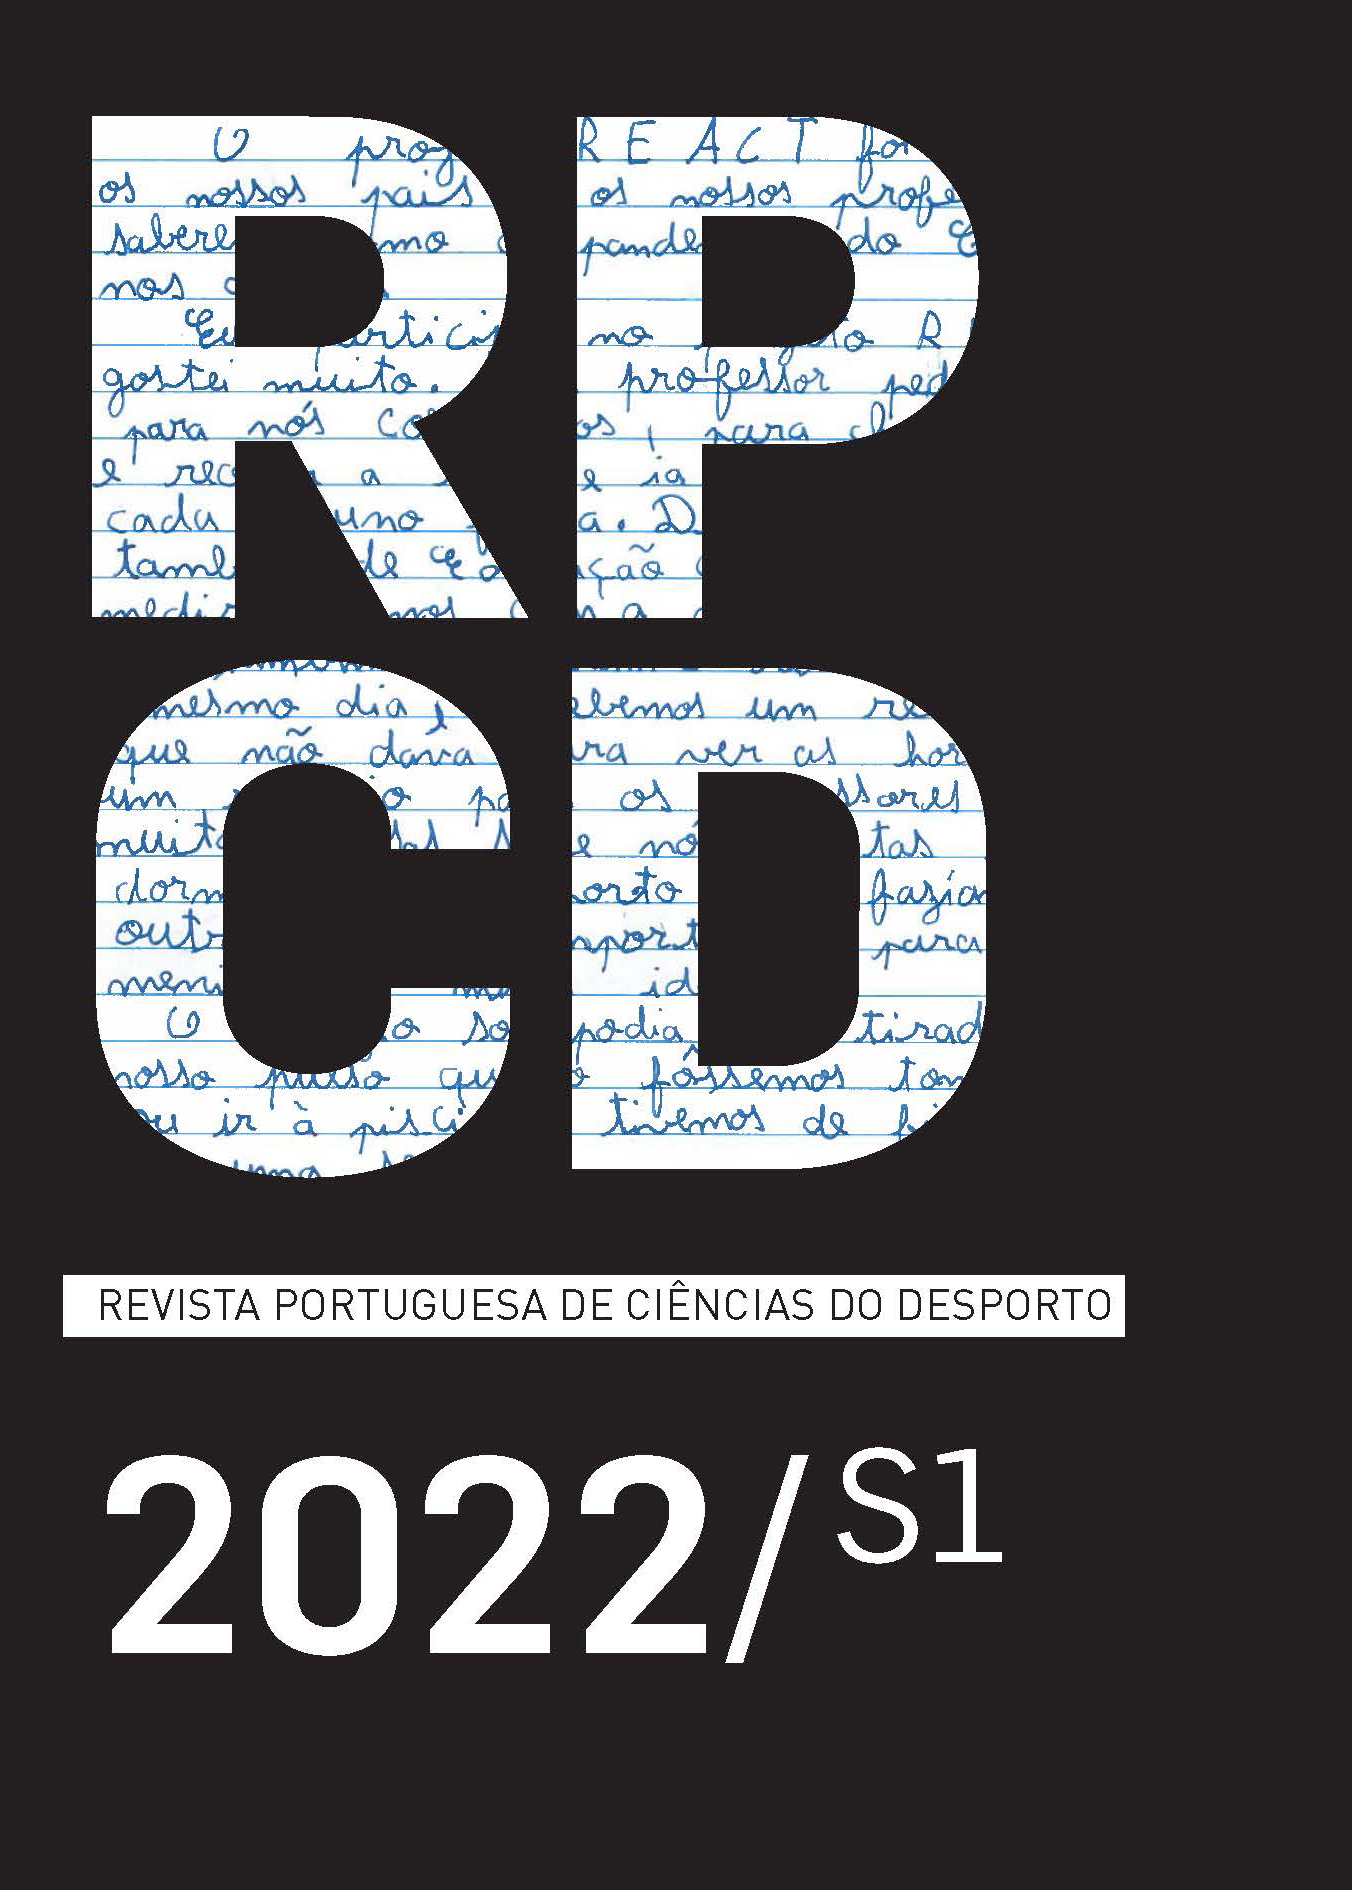 RPCD 2022/S1